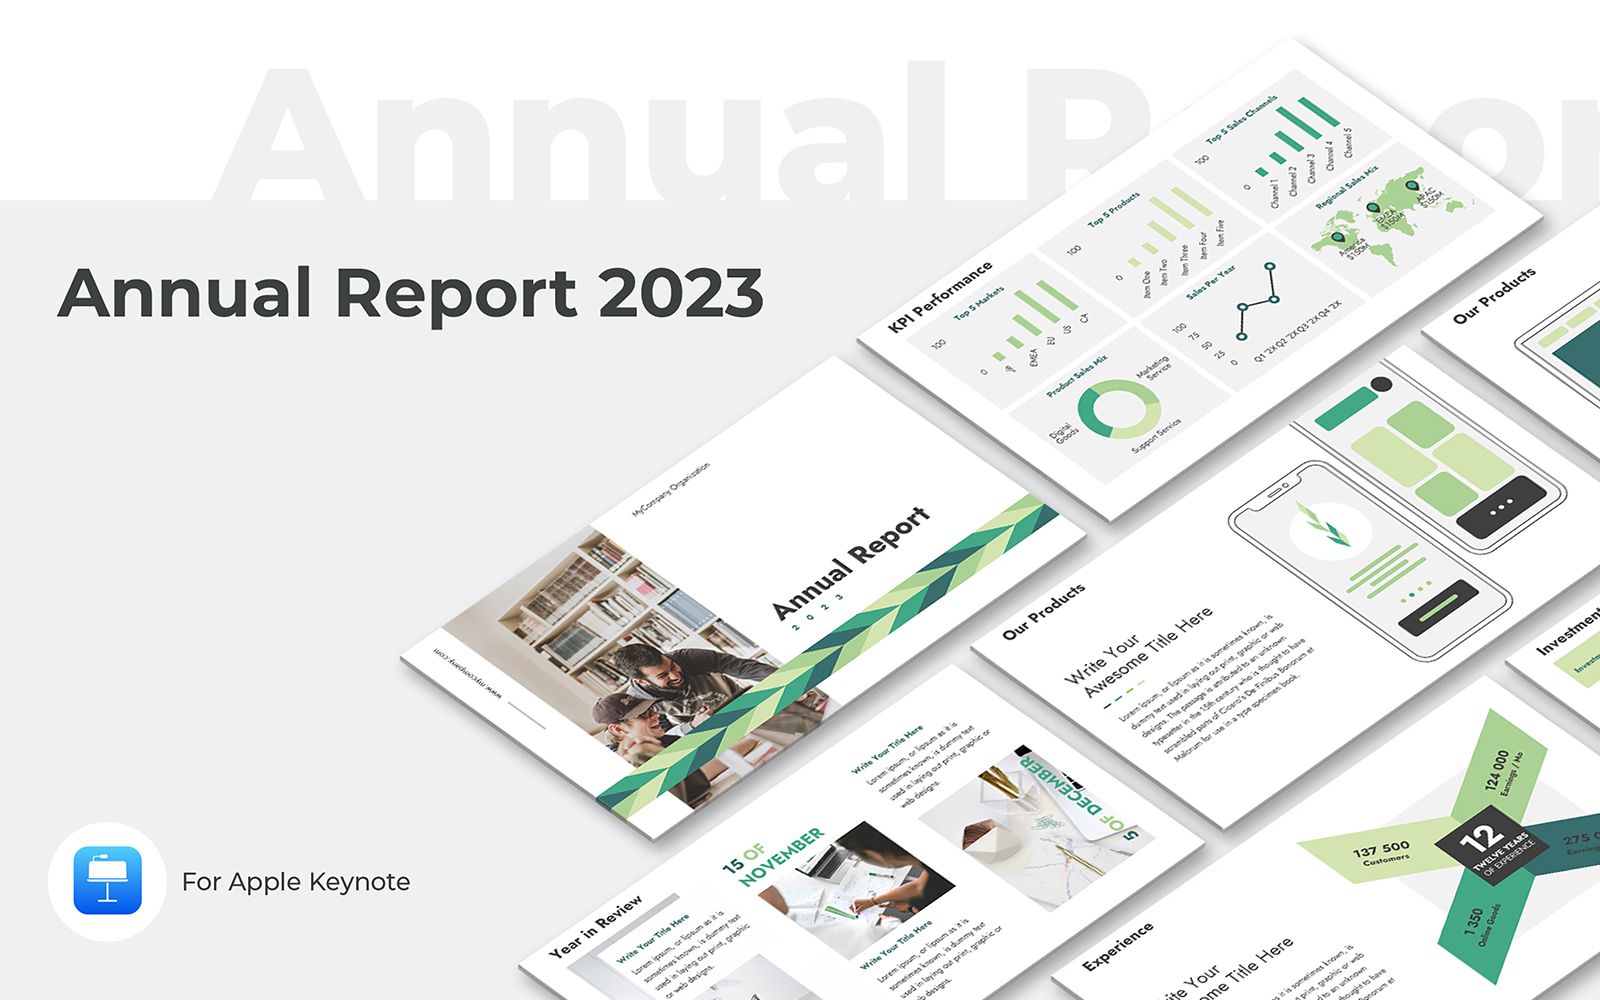 Annual Report 2023 Keynote Presentation Template